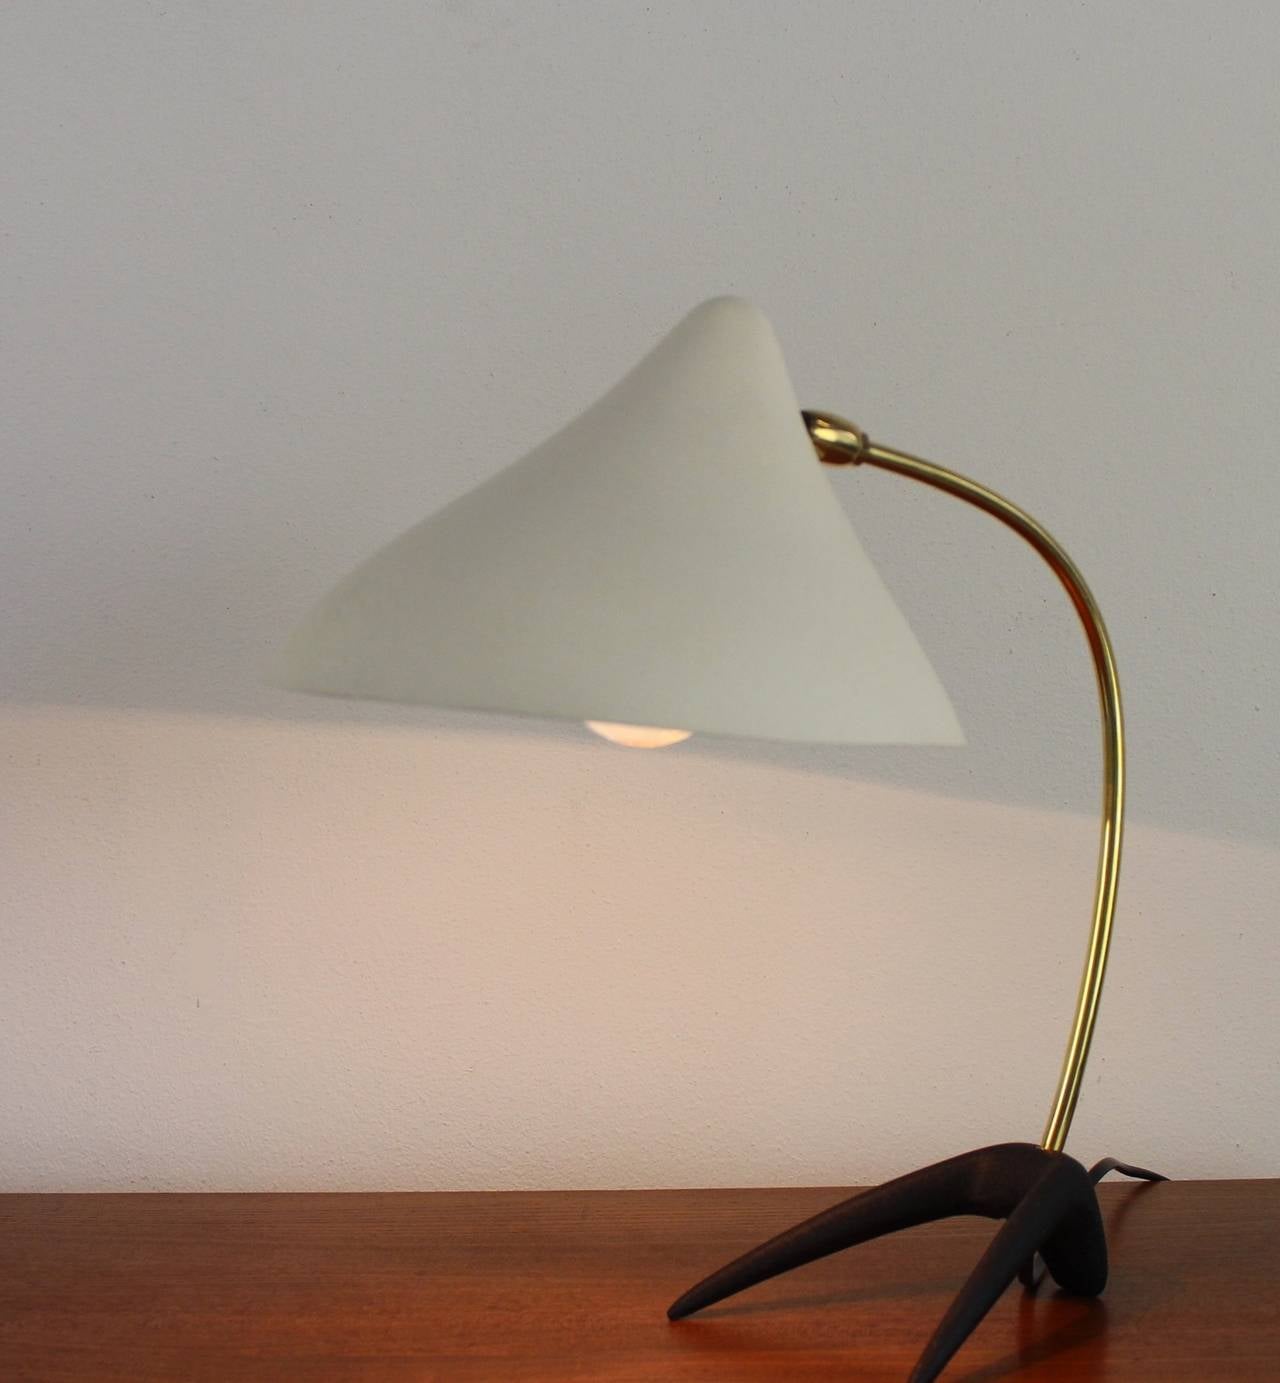 Famous elegant table lamp.
Designer: Louis Kalff.
Manufacturer: Philips The Netherlands.
Black metal feet and brass arm.
Broken white metal hood.